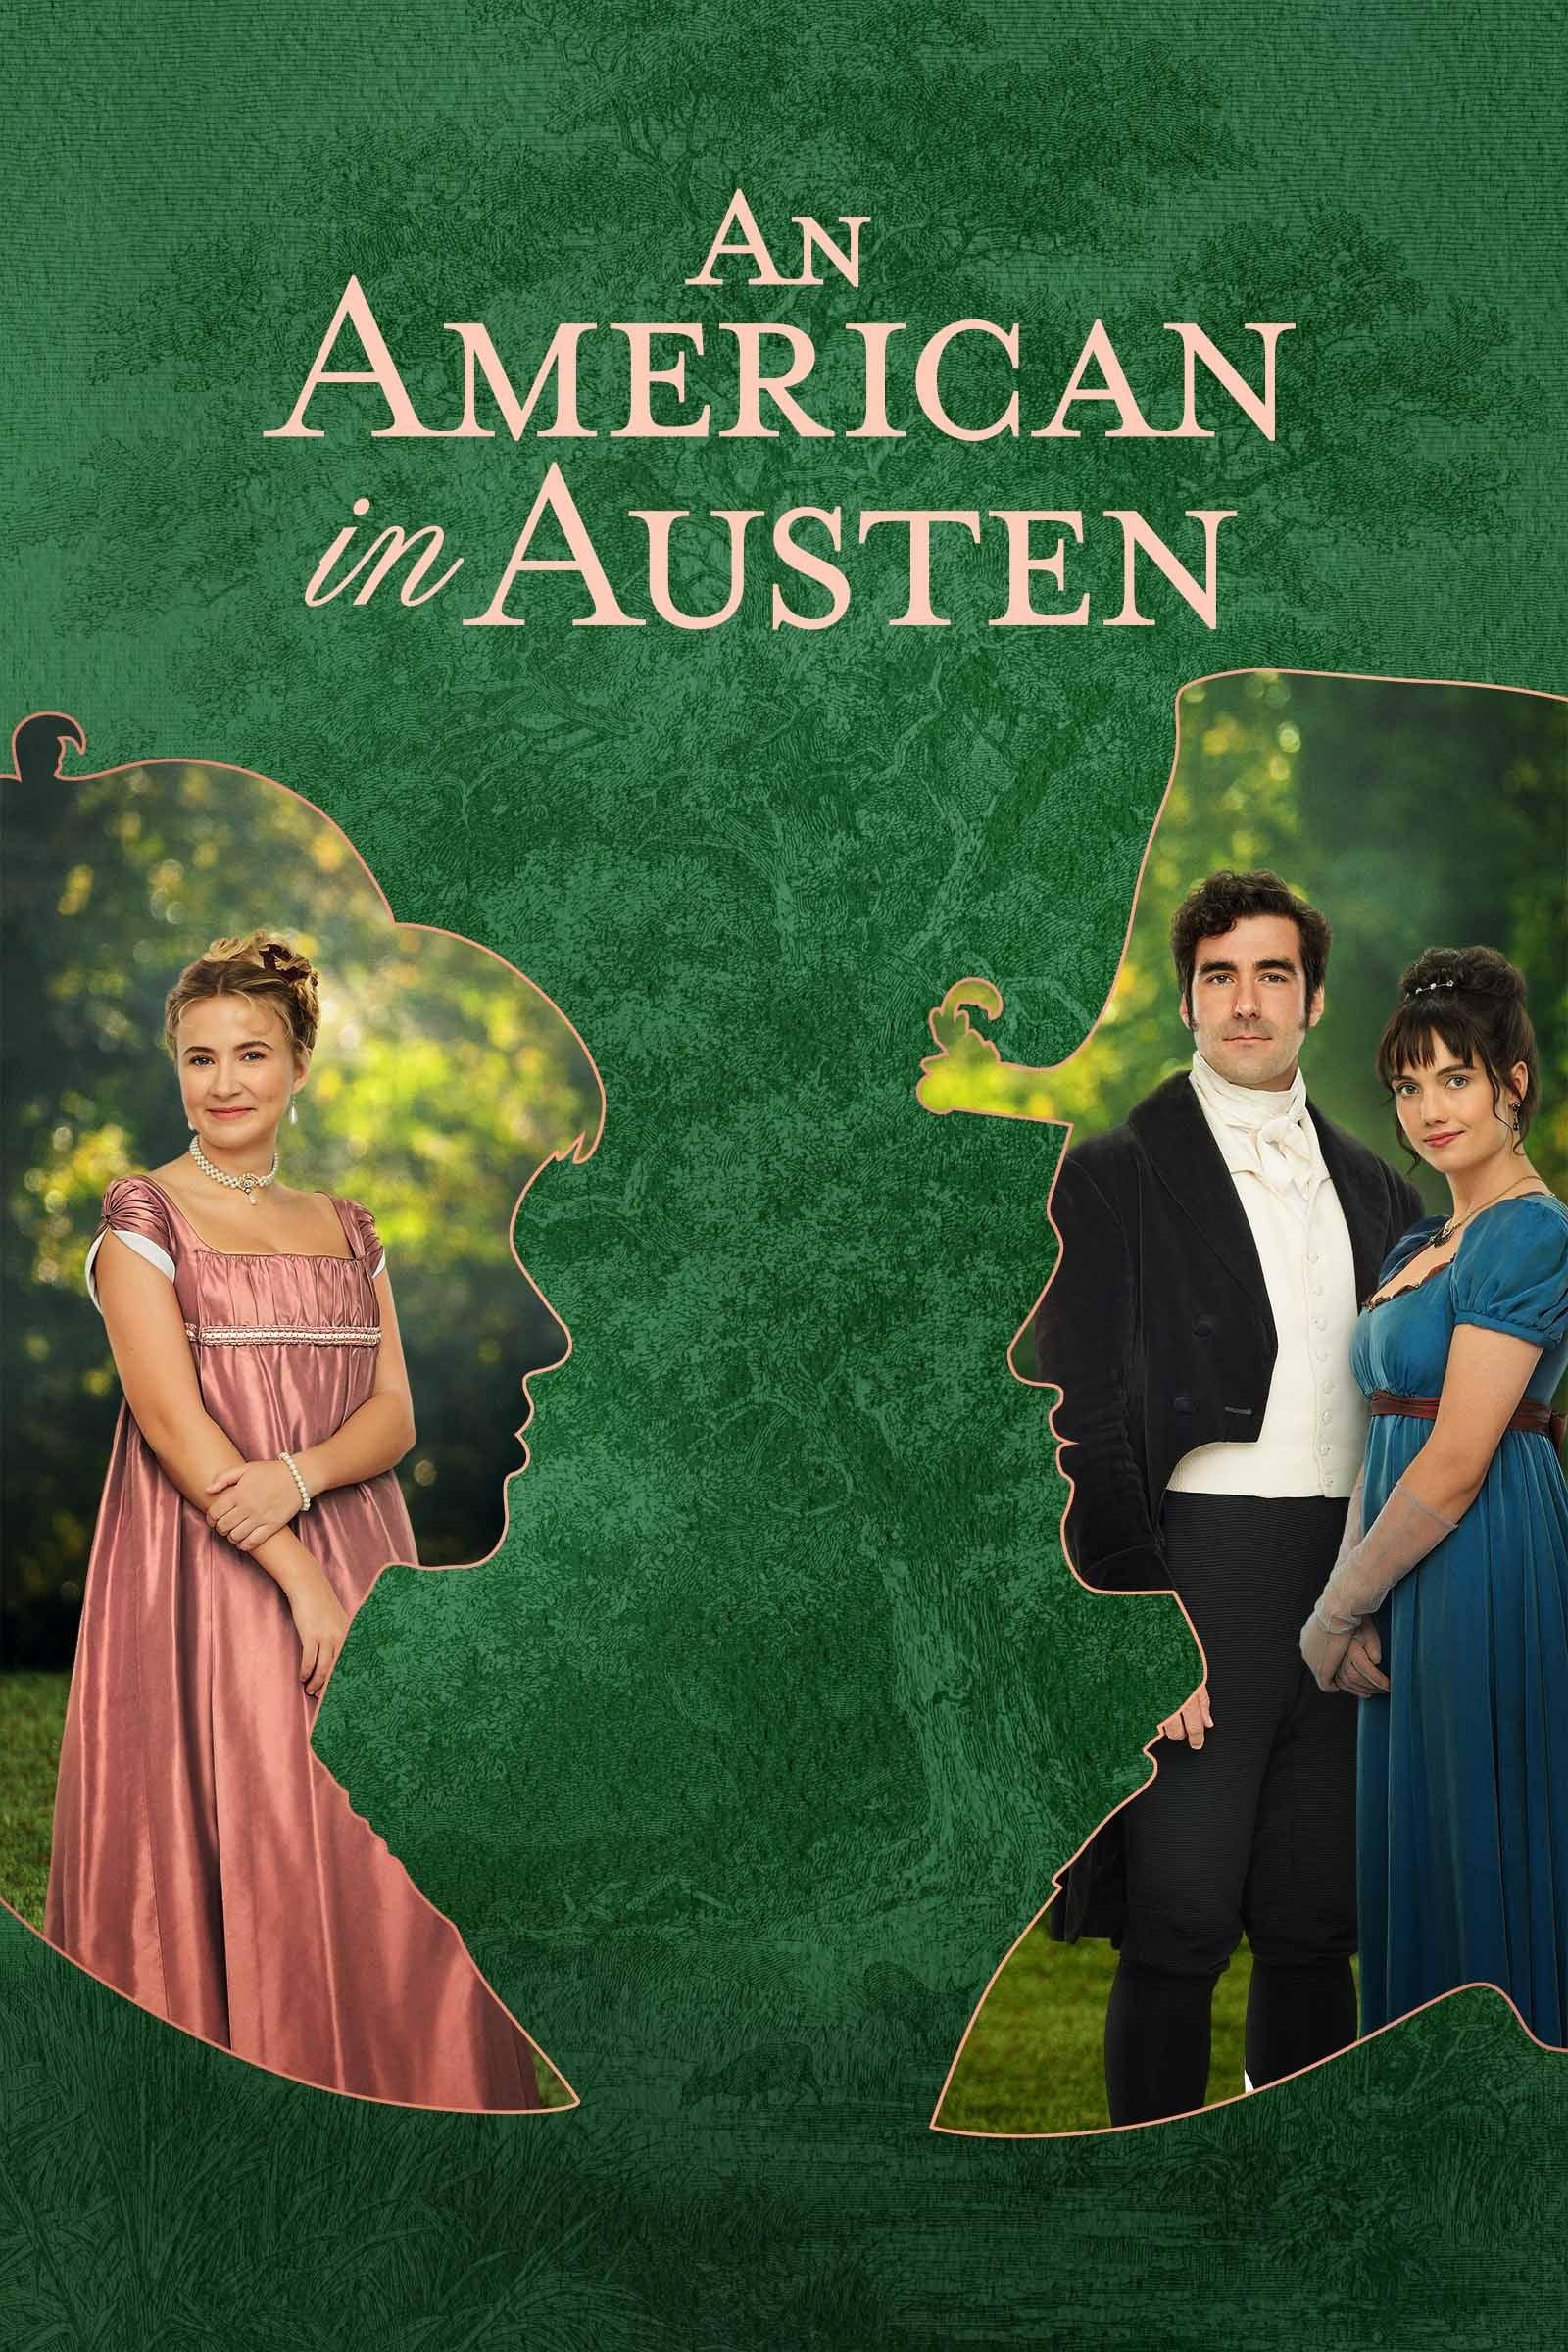 An American in Austen poster